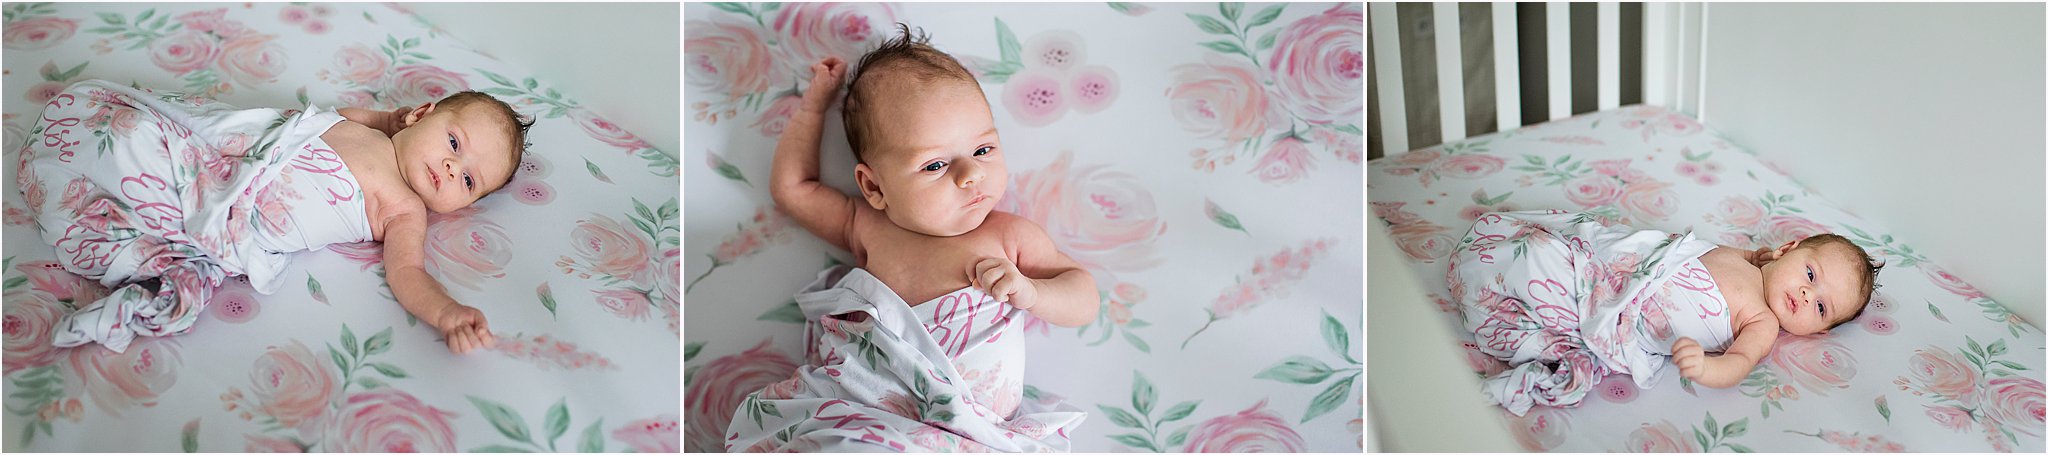 three photos of a baby girl in her crib, Westbrook CT newborn photographer